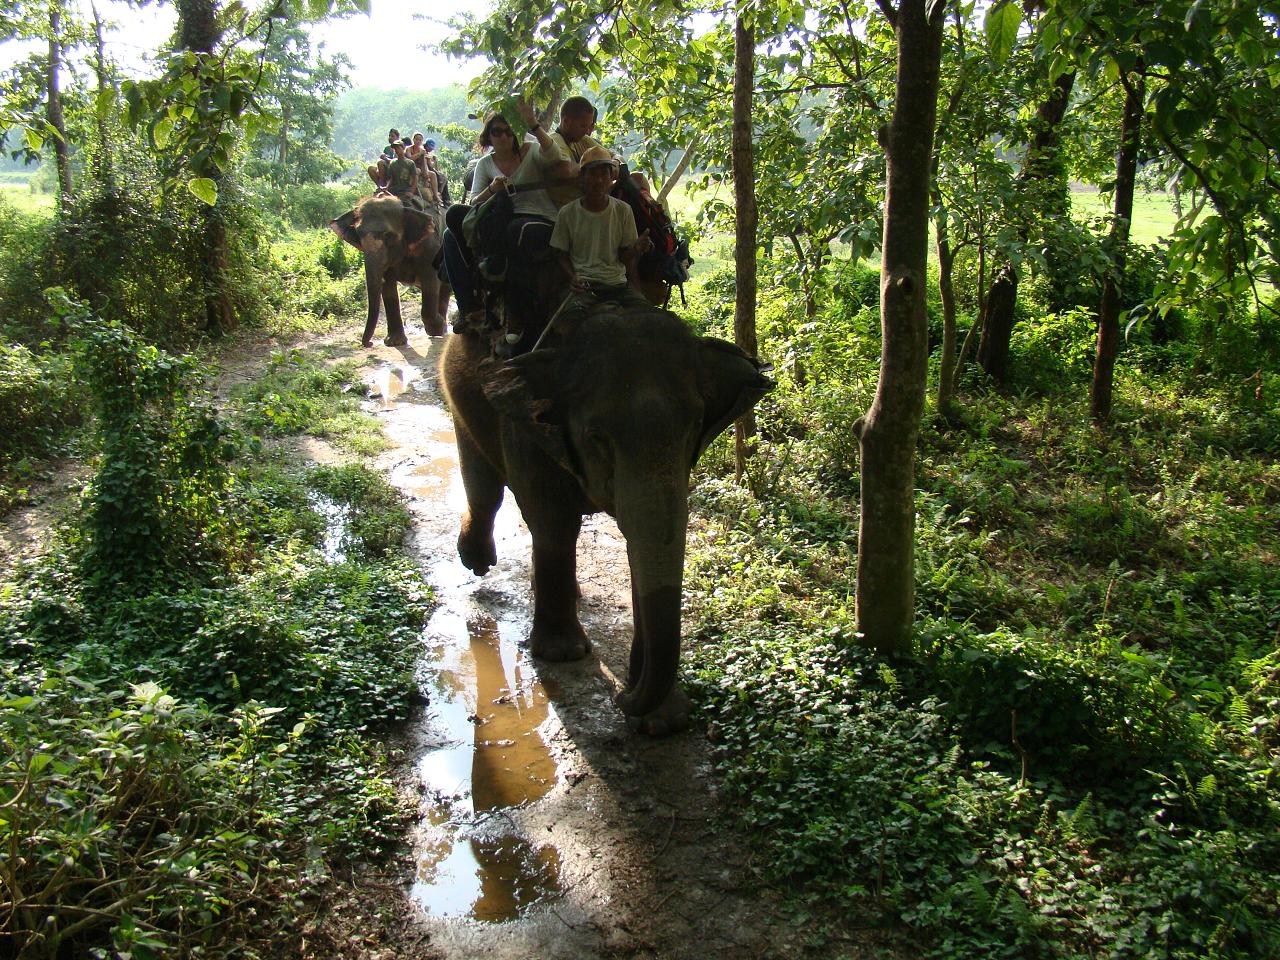 chitwan_elephant_safari167.jpg